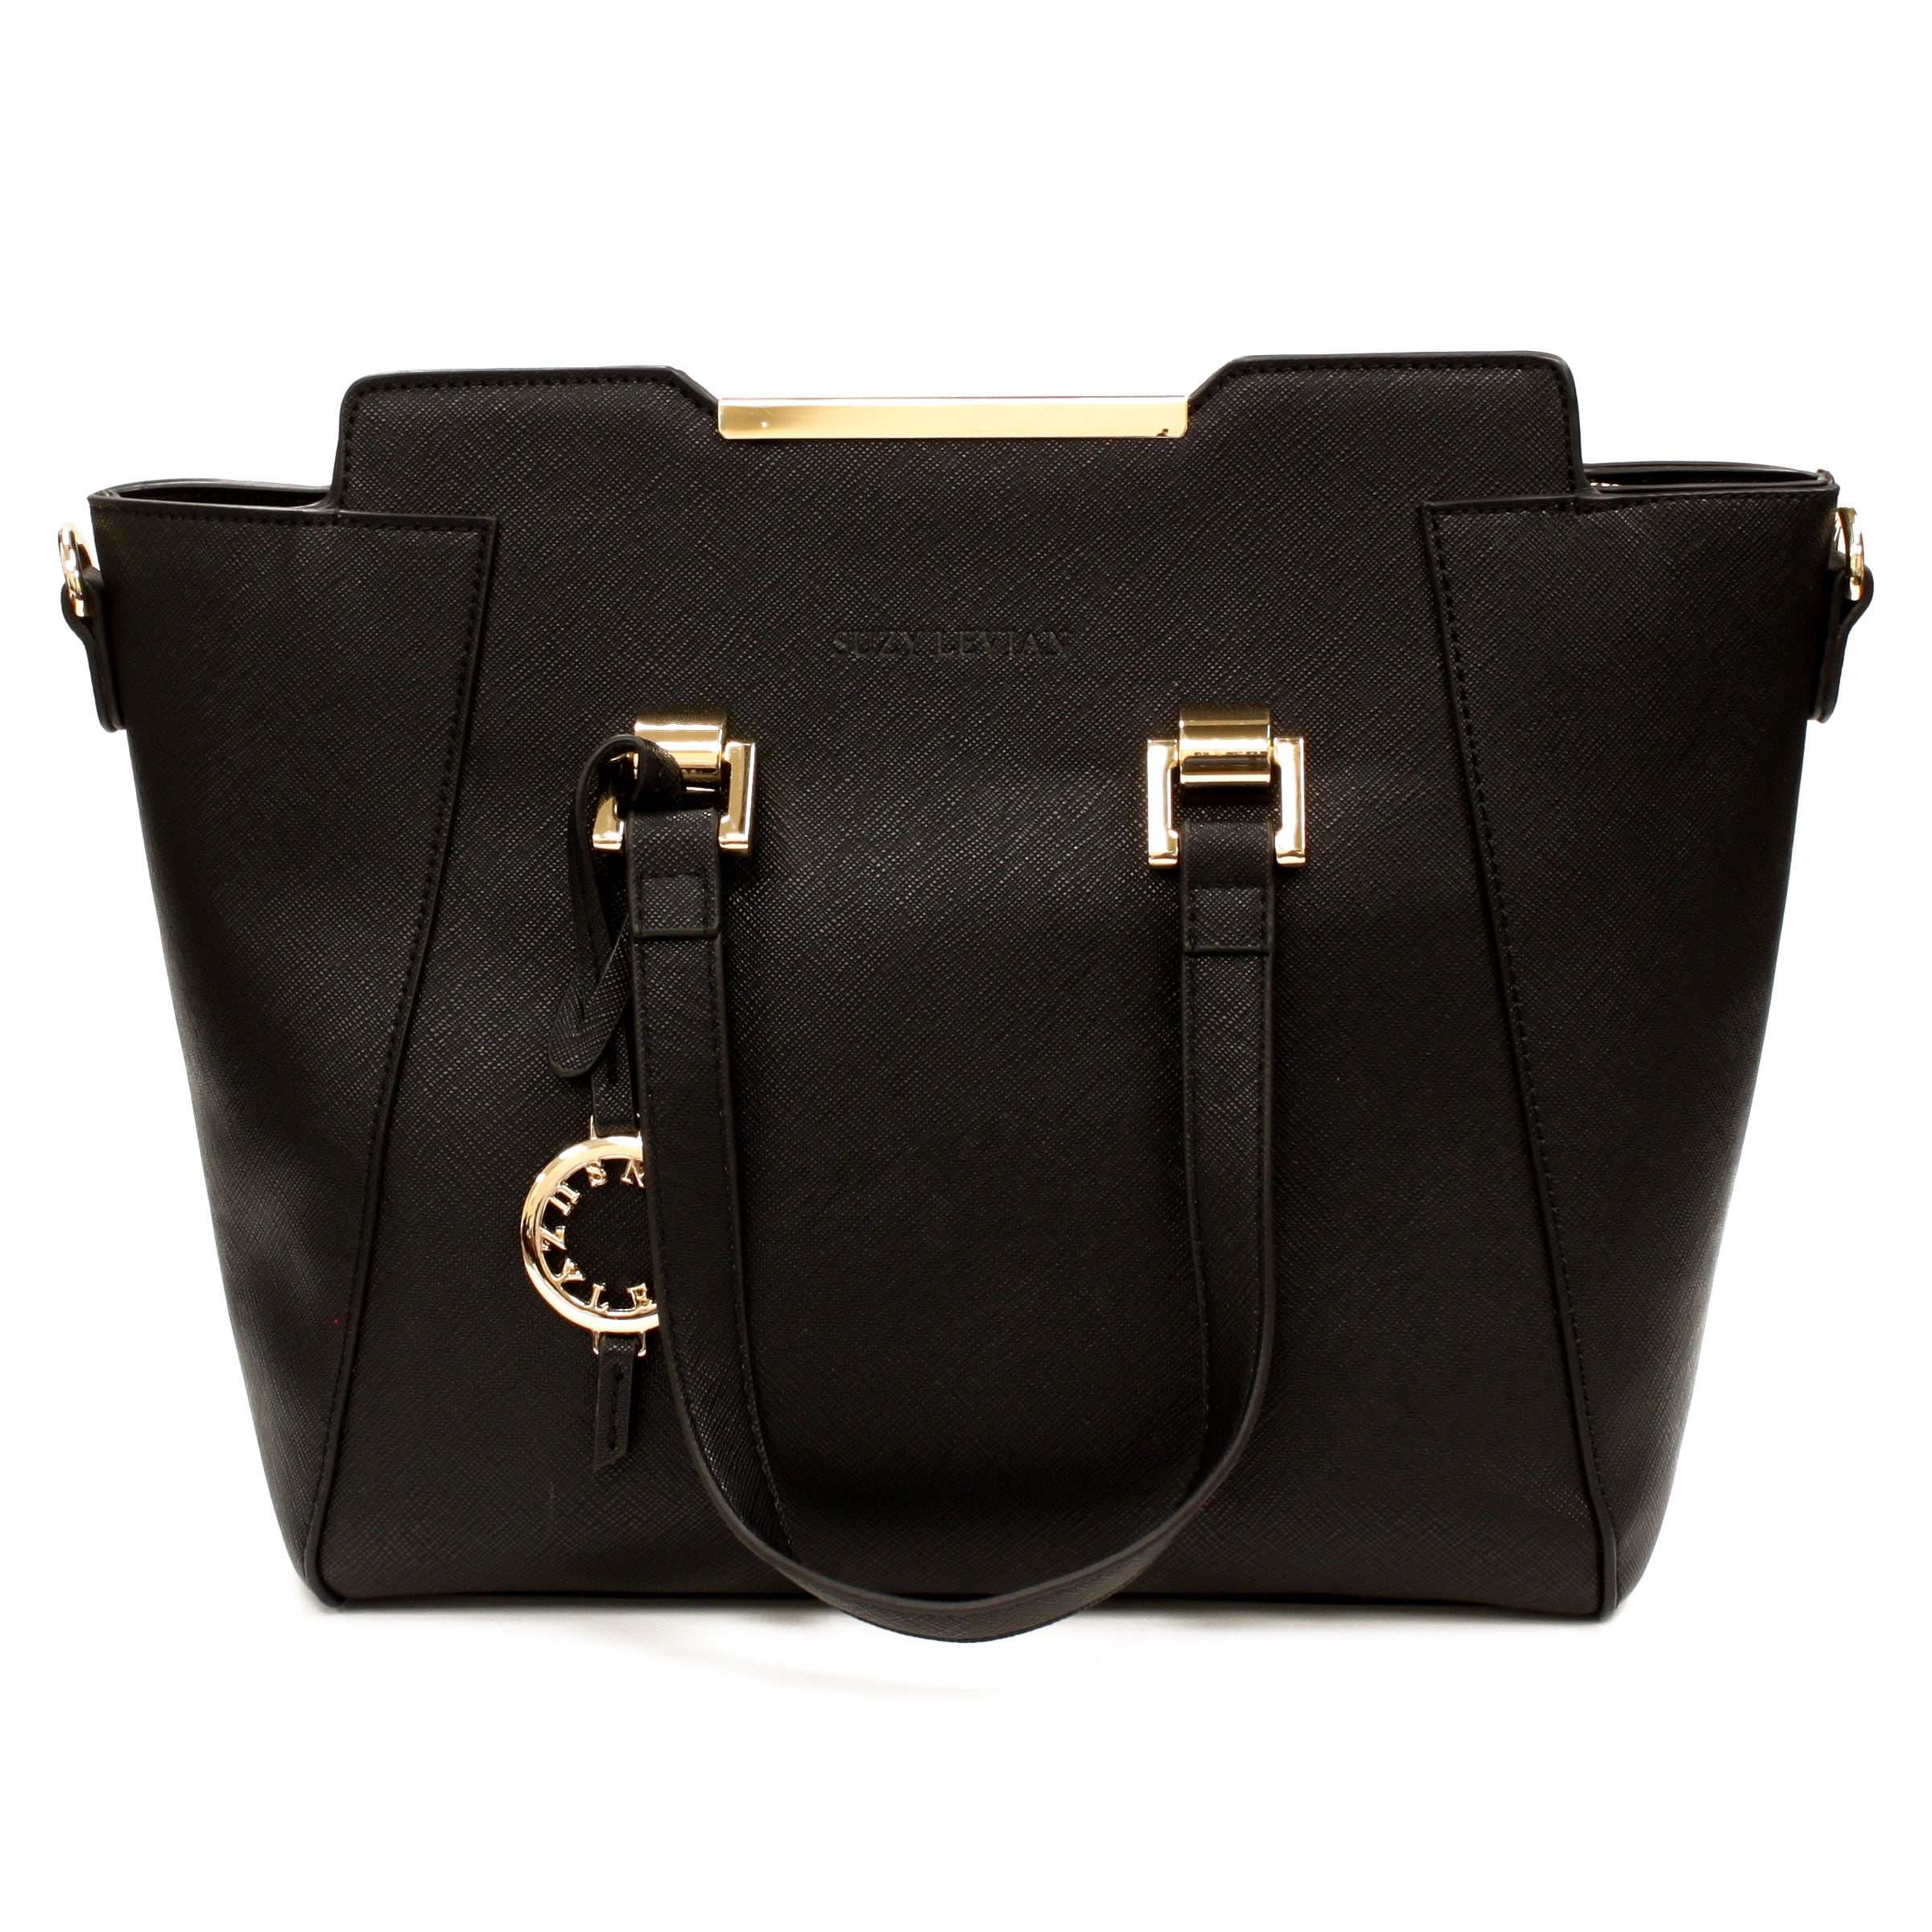 Calvin Klein SaffiaNo Leather Satchel Top Handle Bag